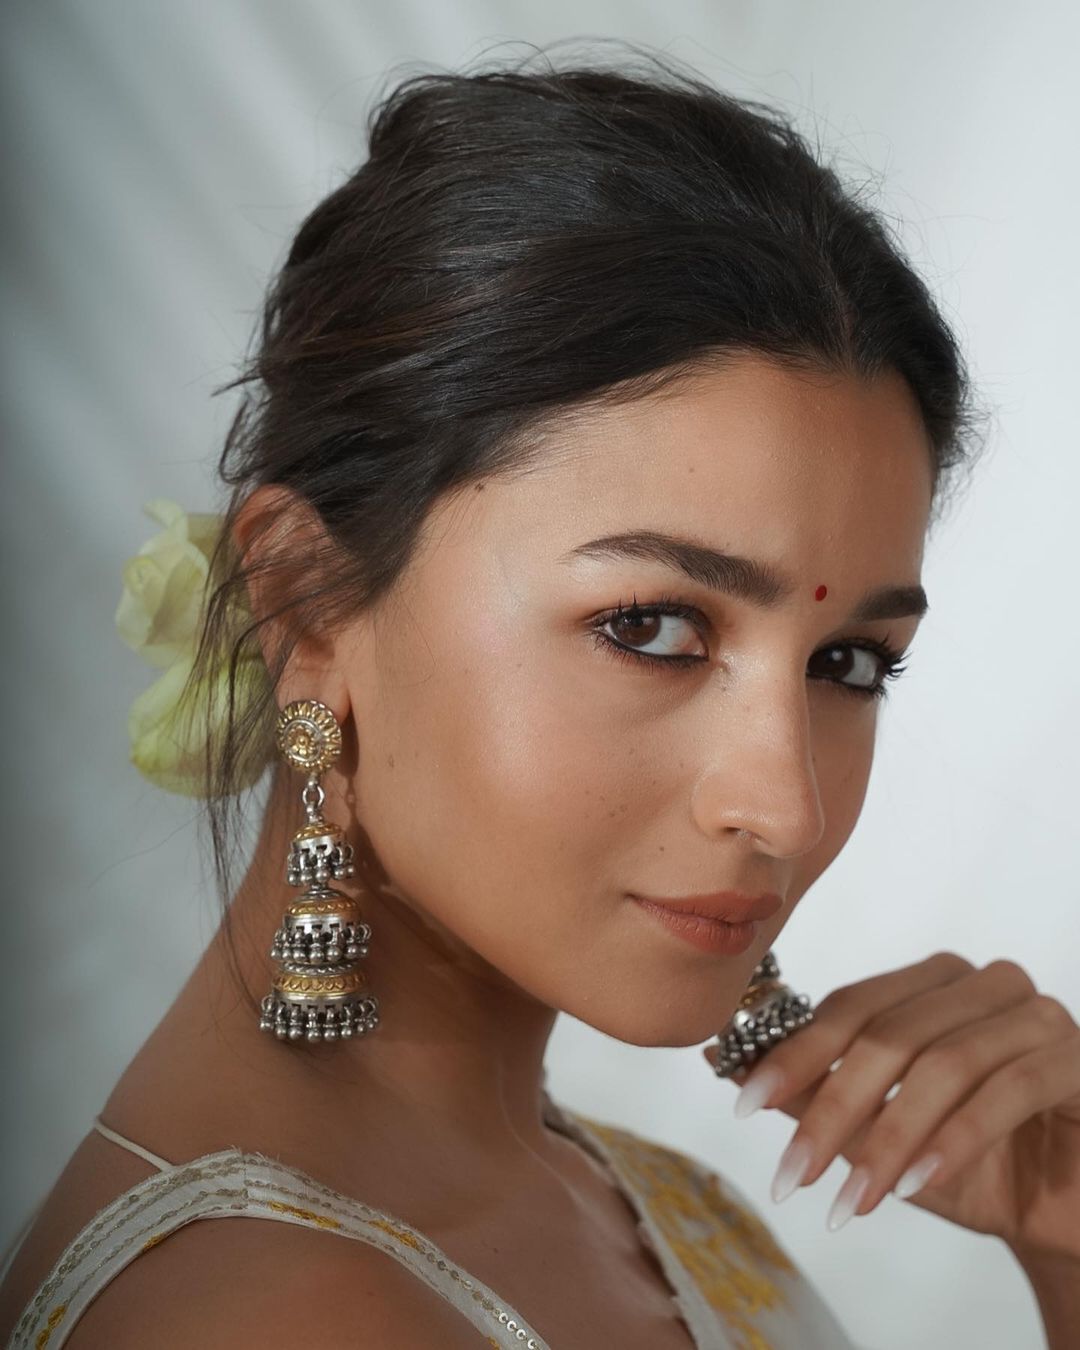 Alia Bhatt looks breathtaking with her kohl-rimmed eyes and jhumka